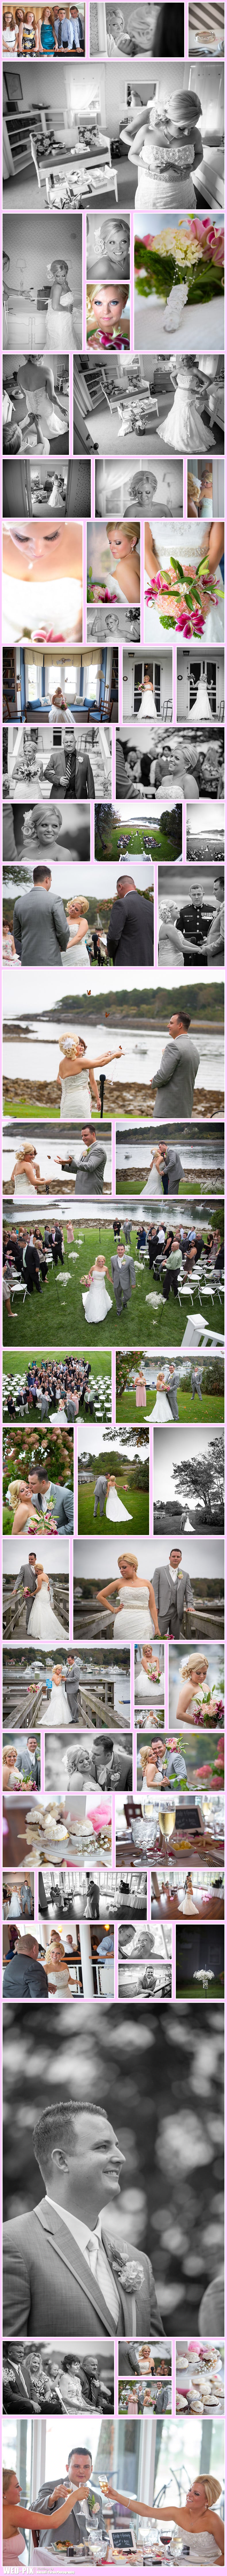 Maine Wedding Photographer, Maine wedding photographers, Maine Wedding Photography